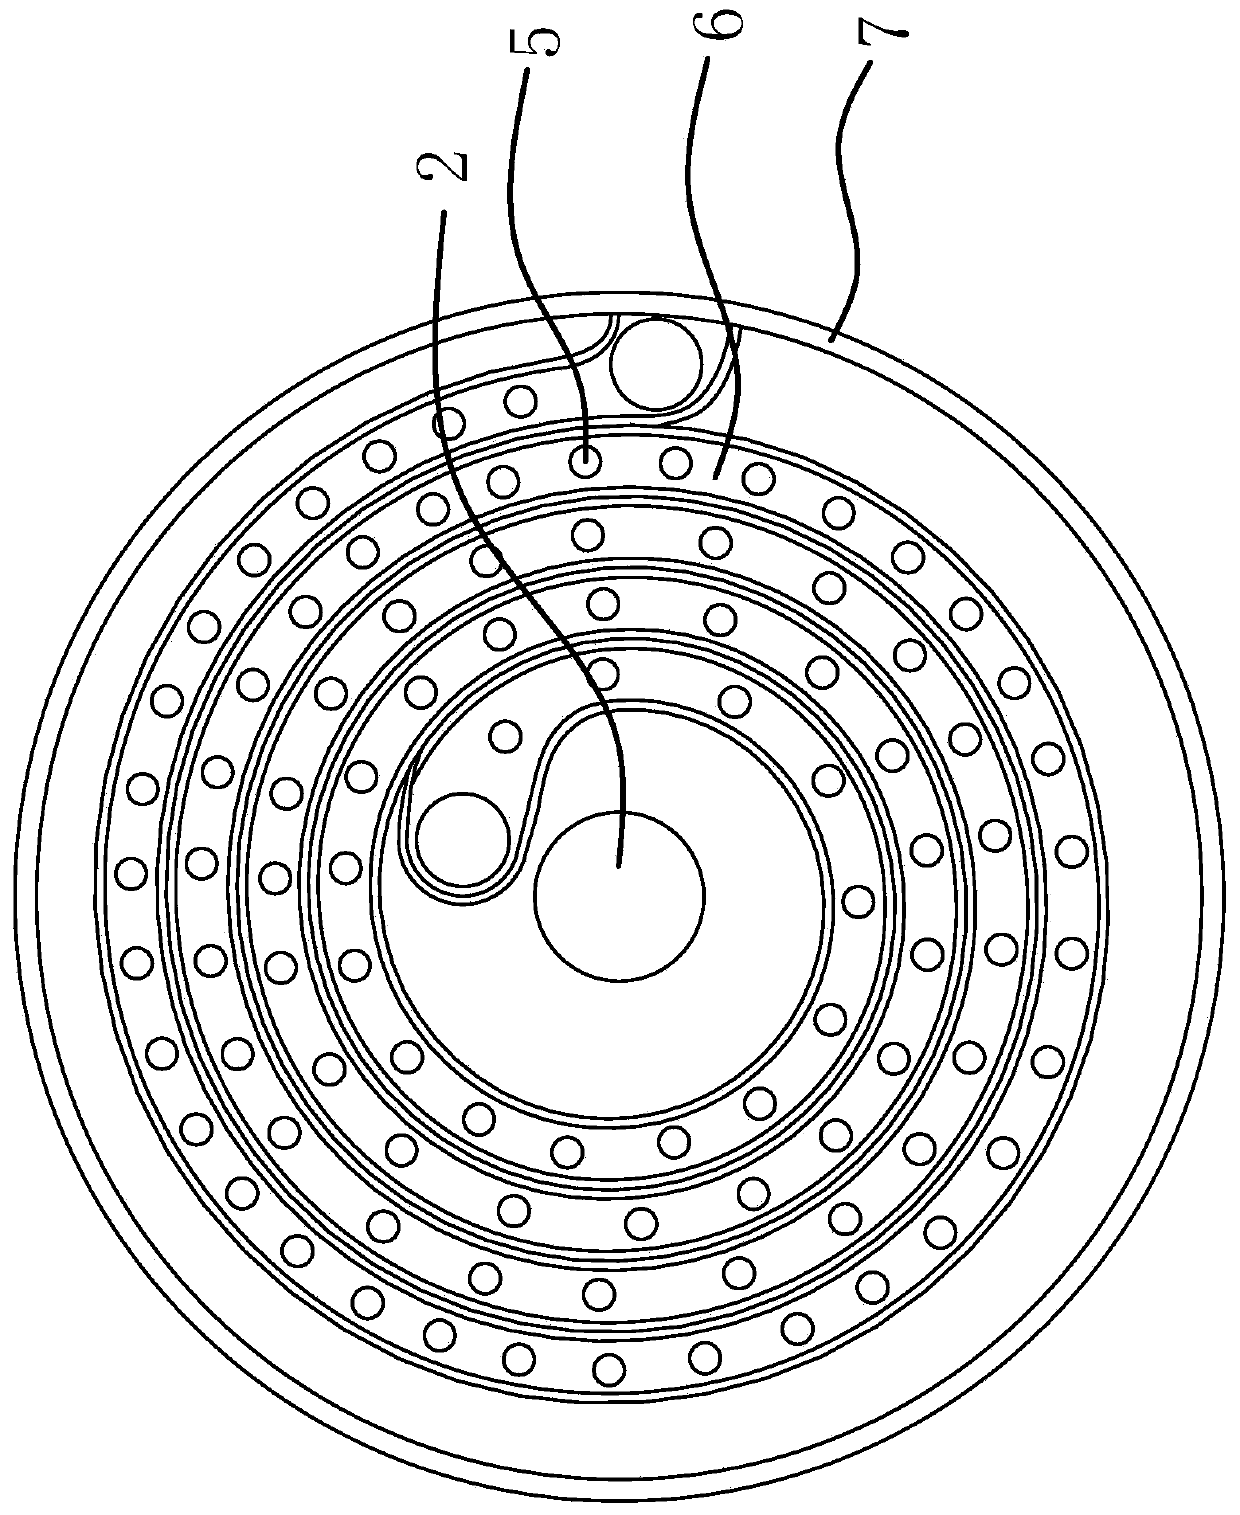 Bearing ball automatic classifying mechanism